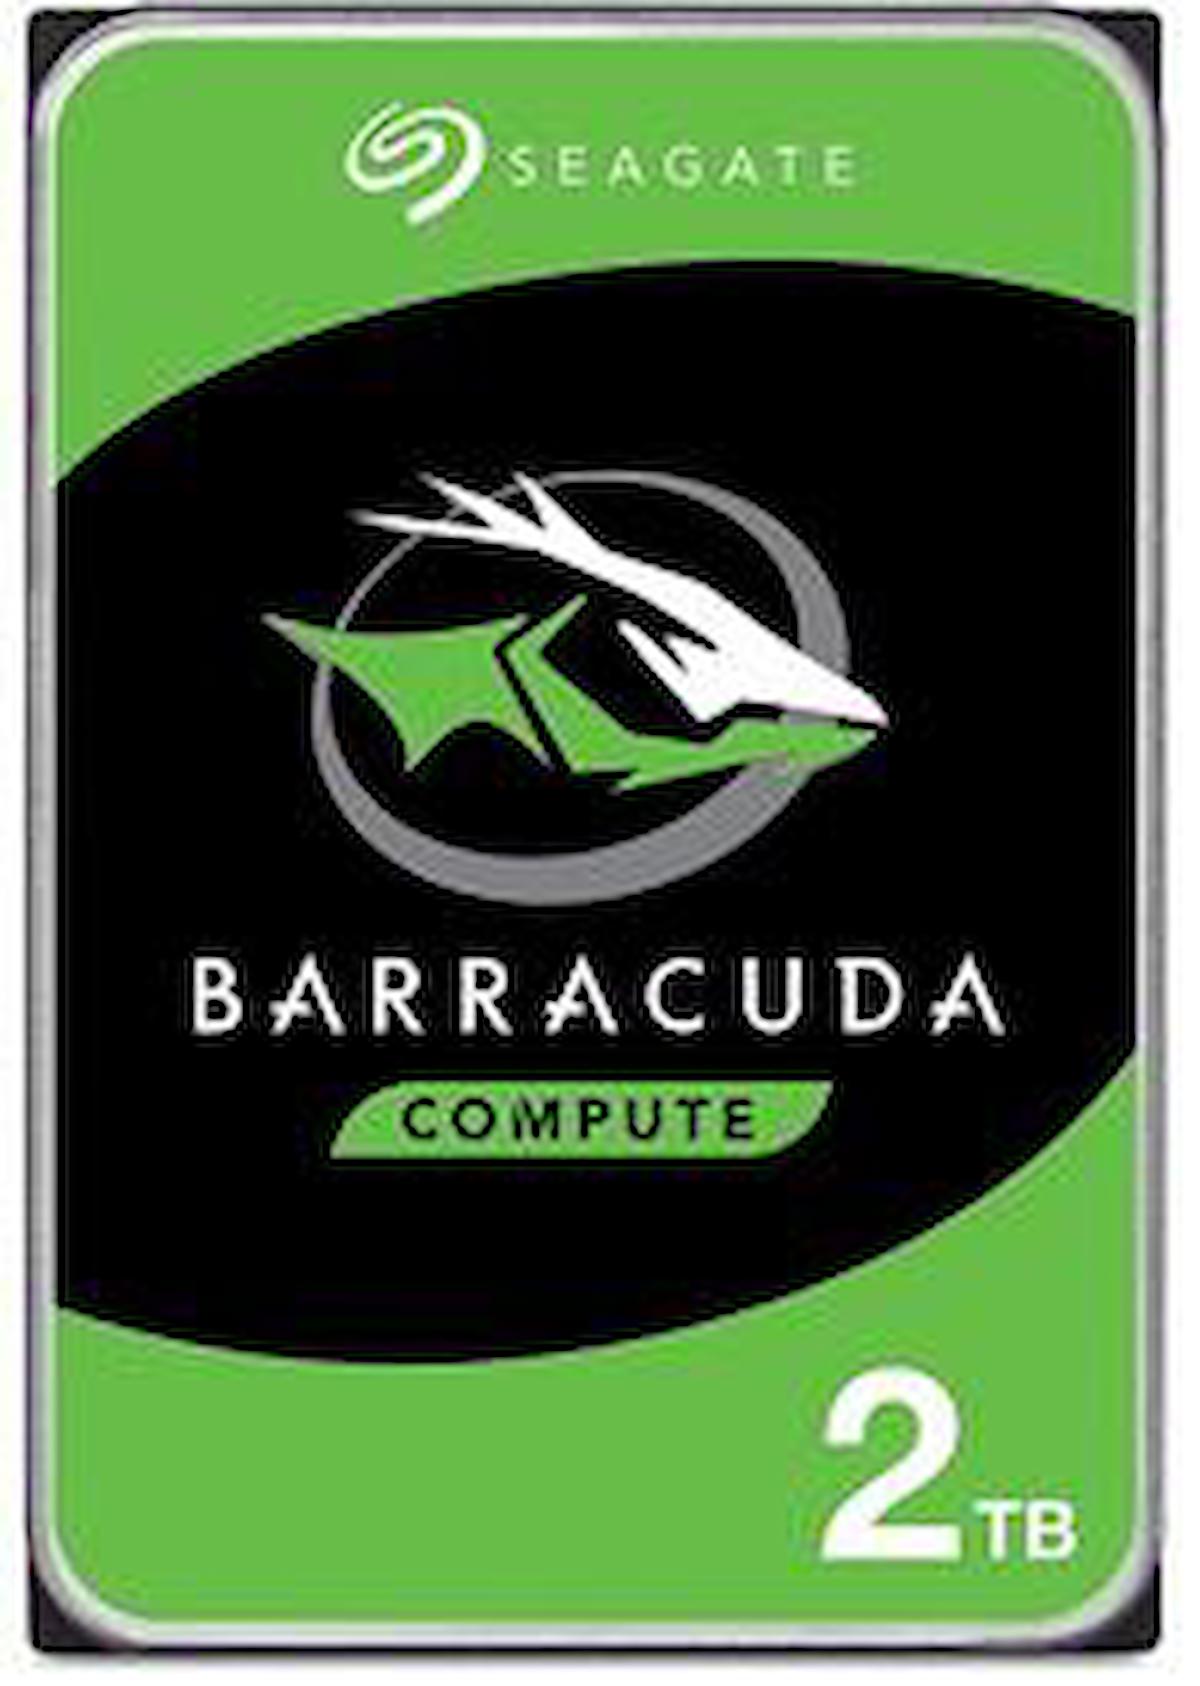 Seagate Barracuda ST2000DM008 2 TB 3.5 inç 7200 RPM 256 MB SATA 3.0 PC Harddisk